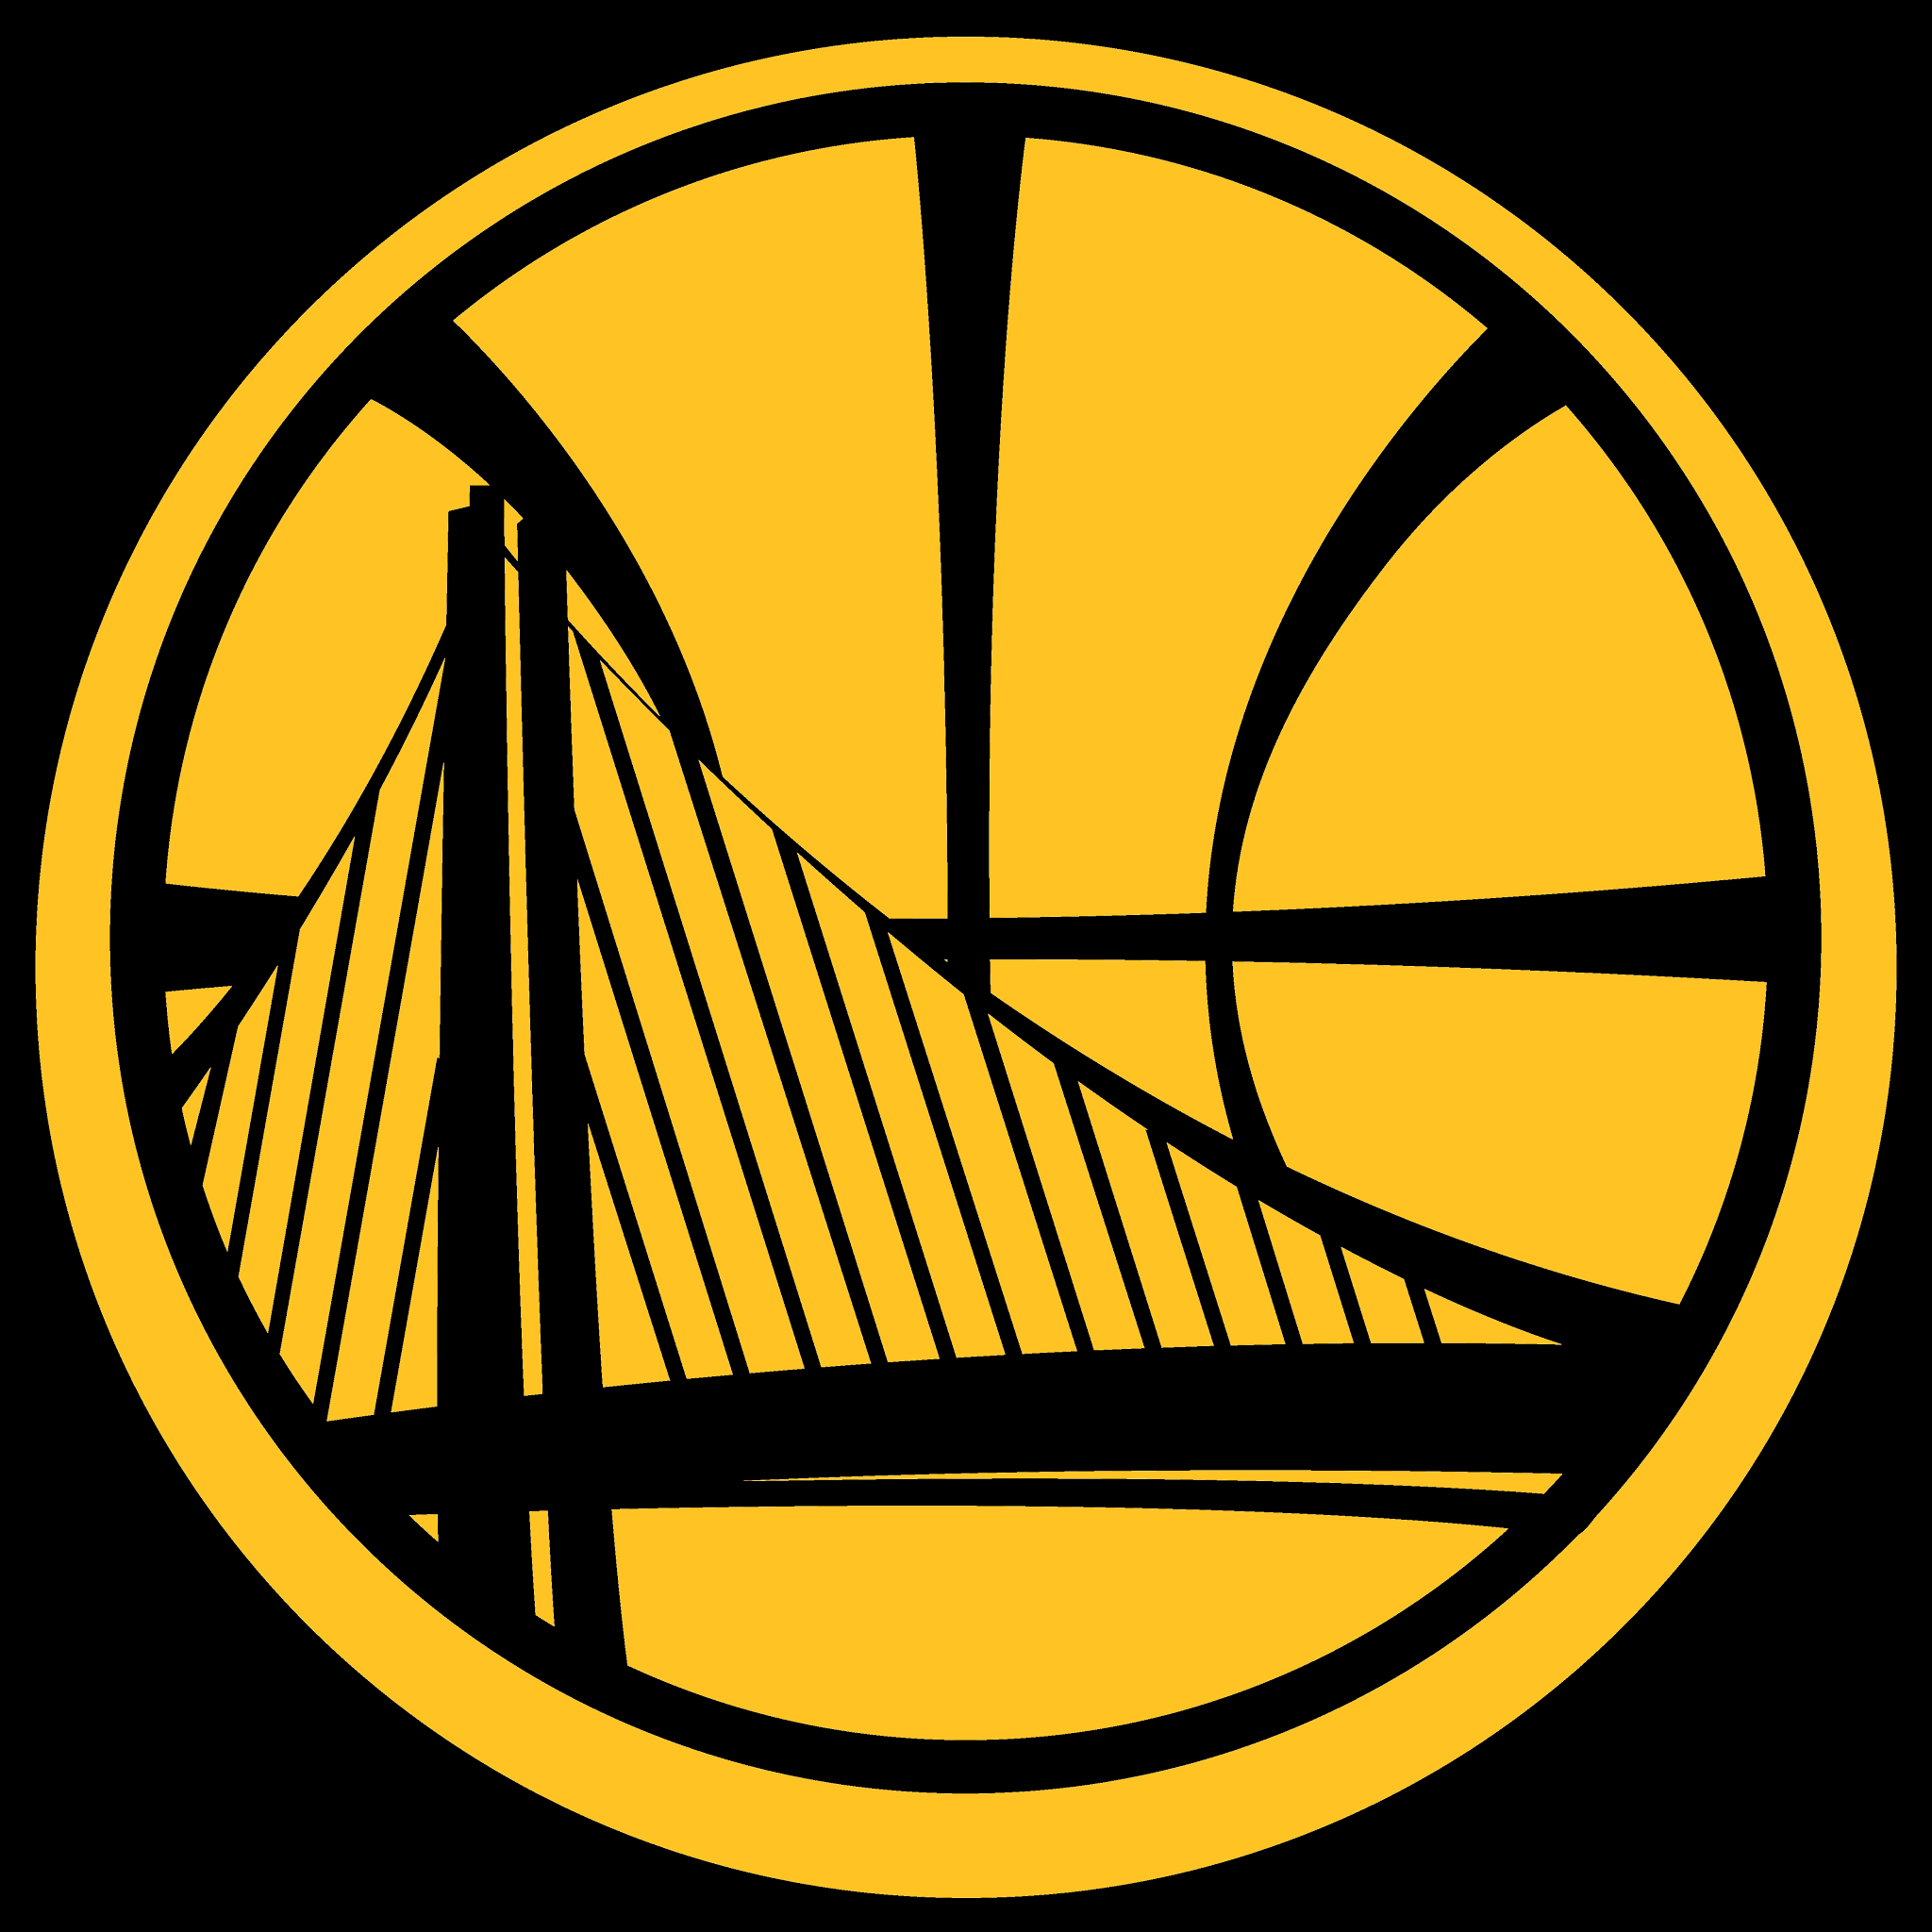 Warriors Logo - Golden state warriors logo png 8 » PNG Image